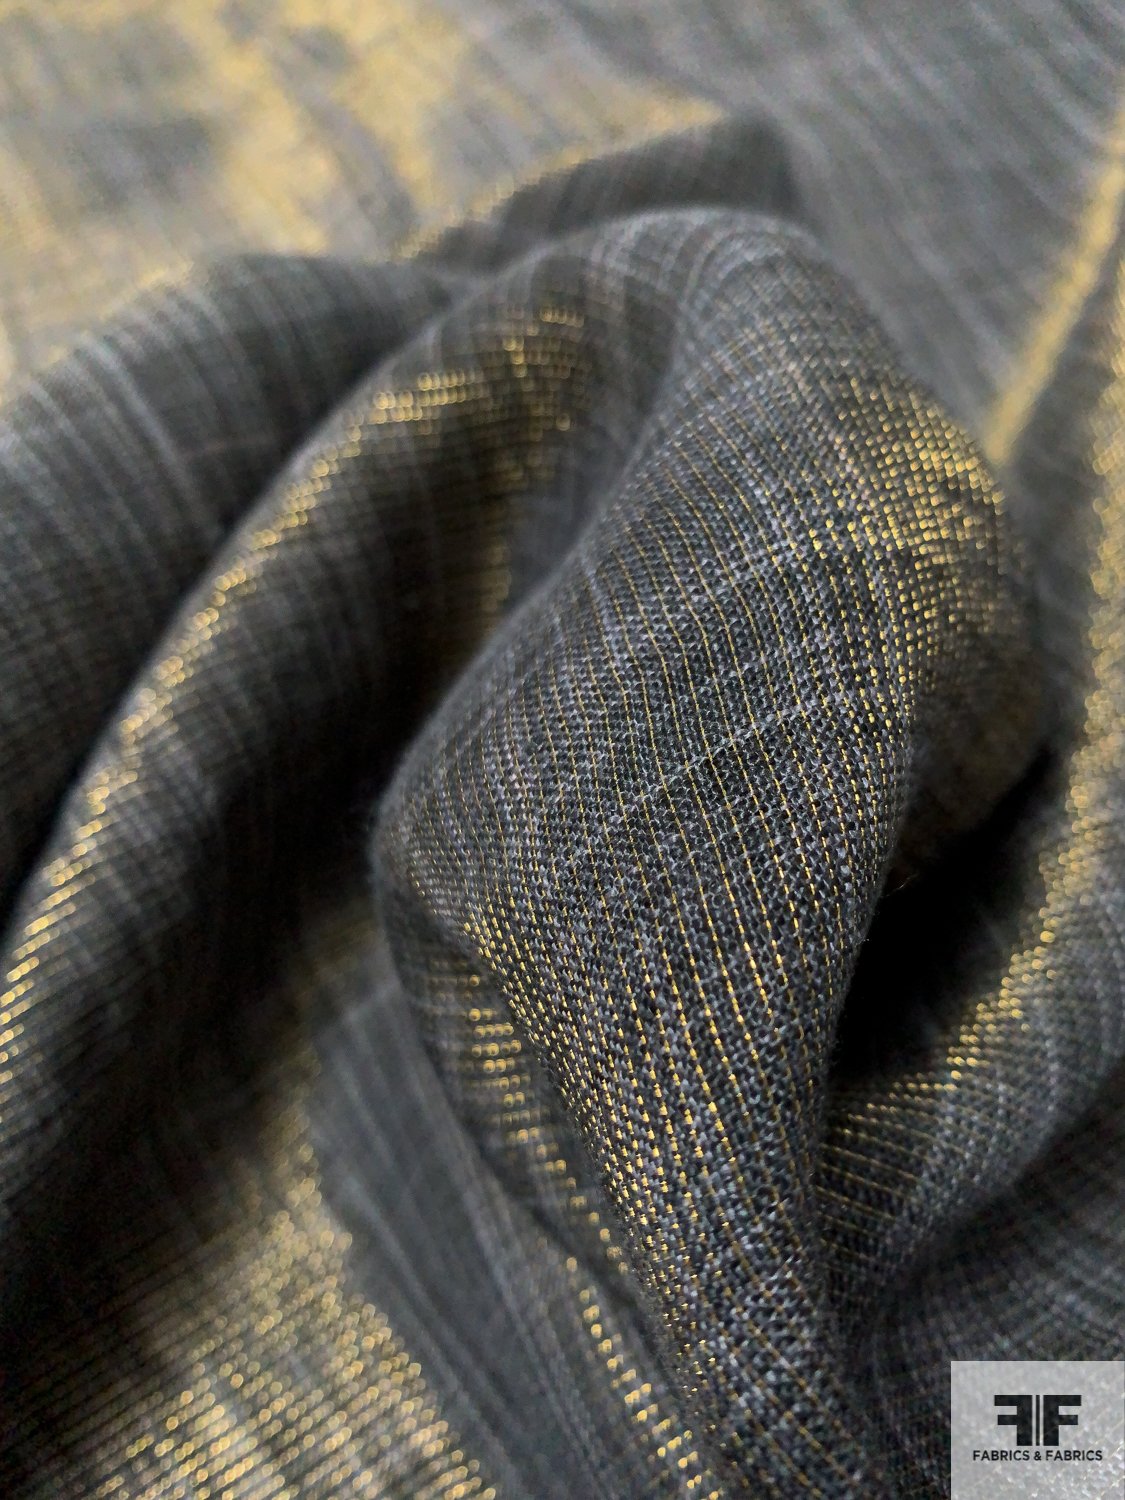 Italian Linen-Like Cotton with Lurex Stripes - Dark Navy / Grey / Gold